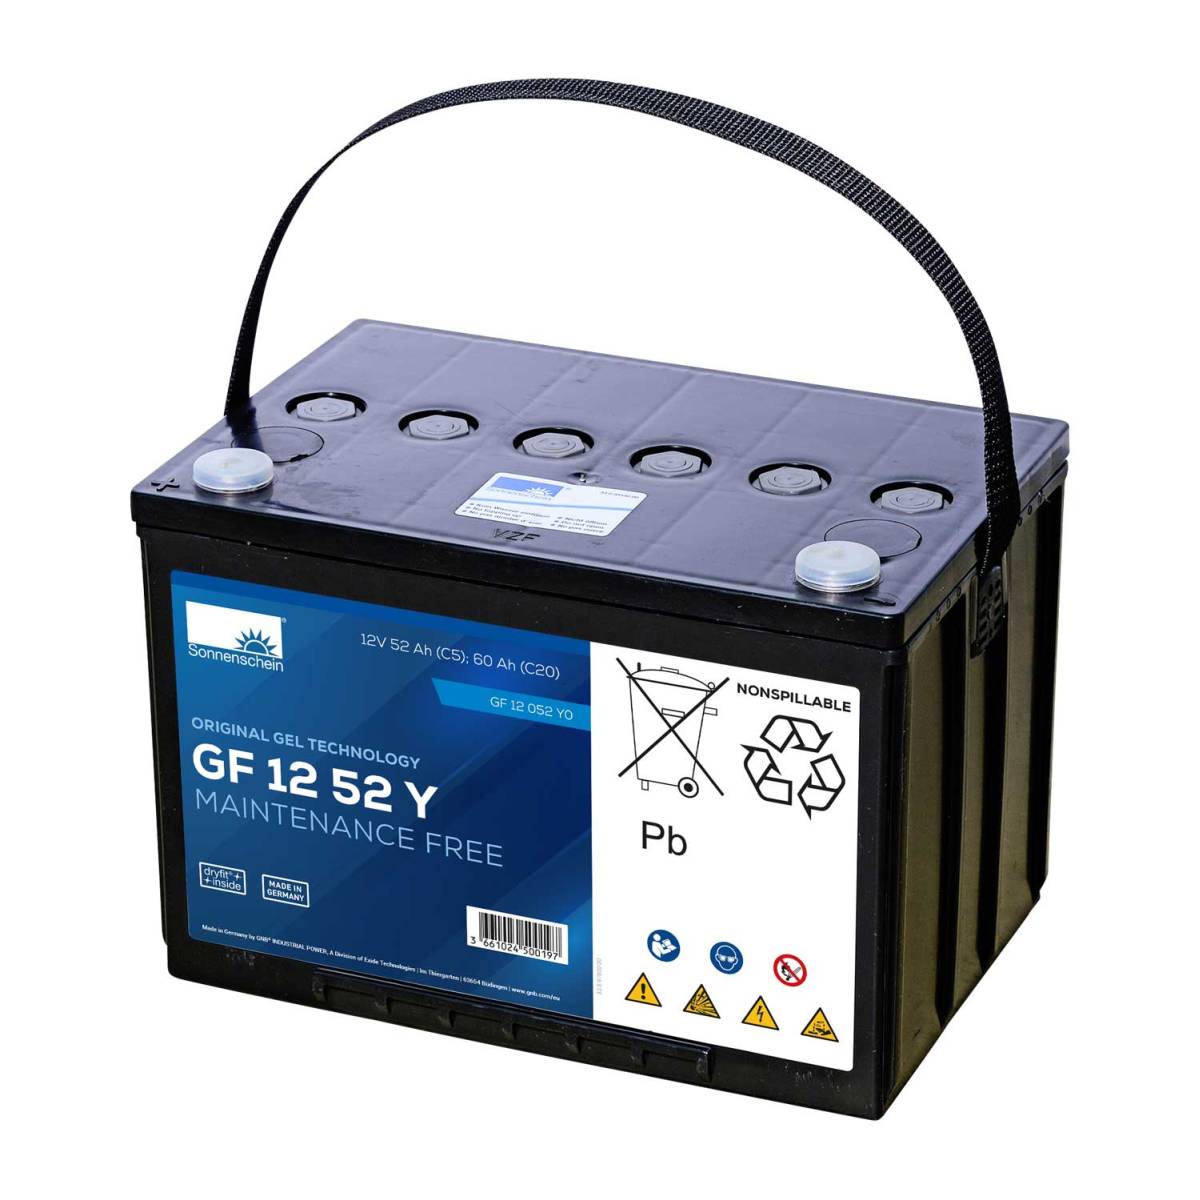 Exide Sonnenschein GF 12 052 Y O dryfit lead gel traction battery